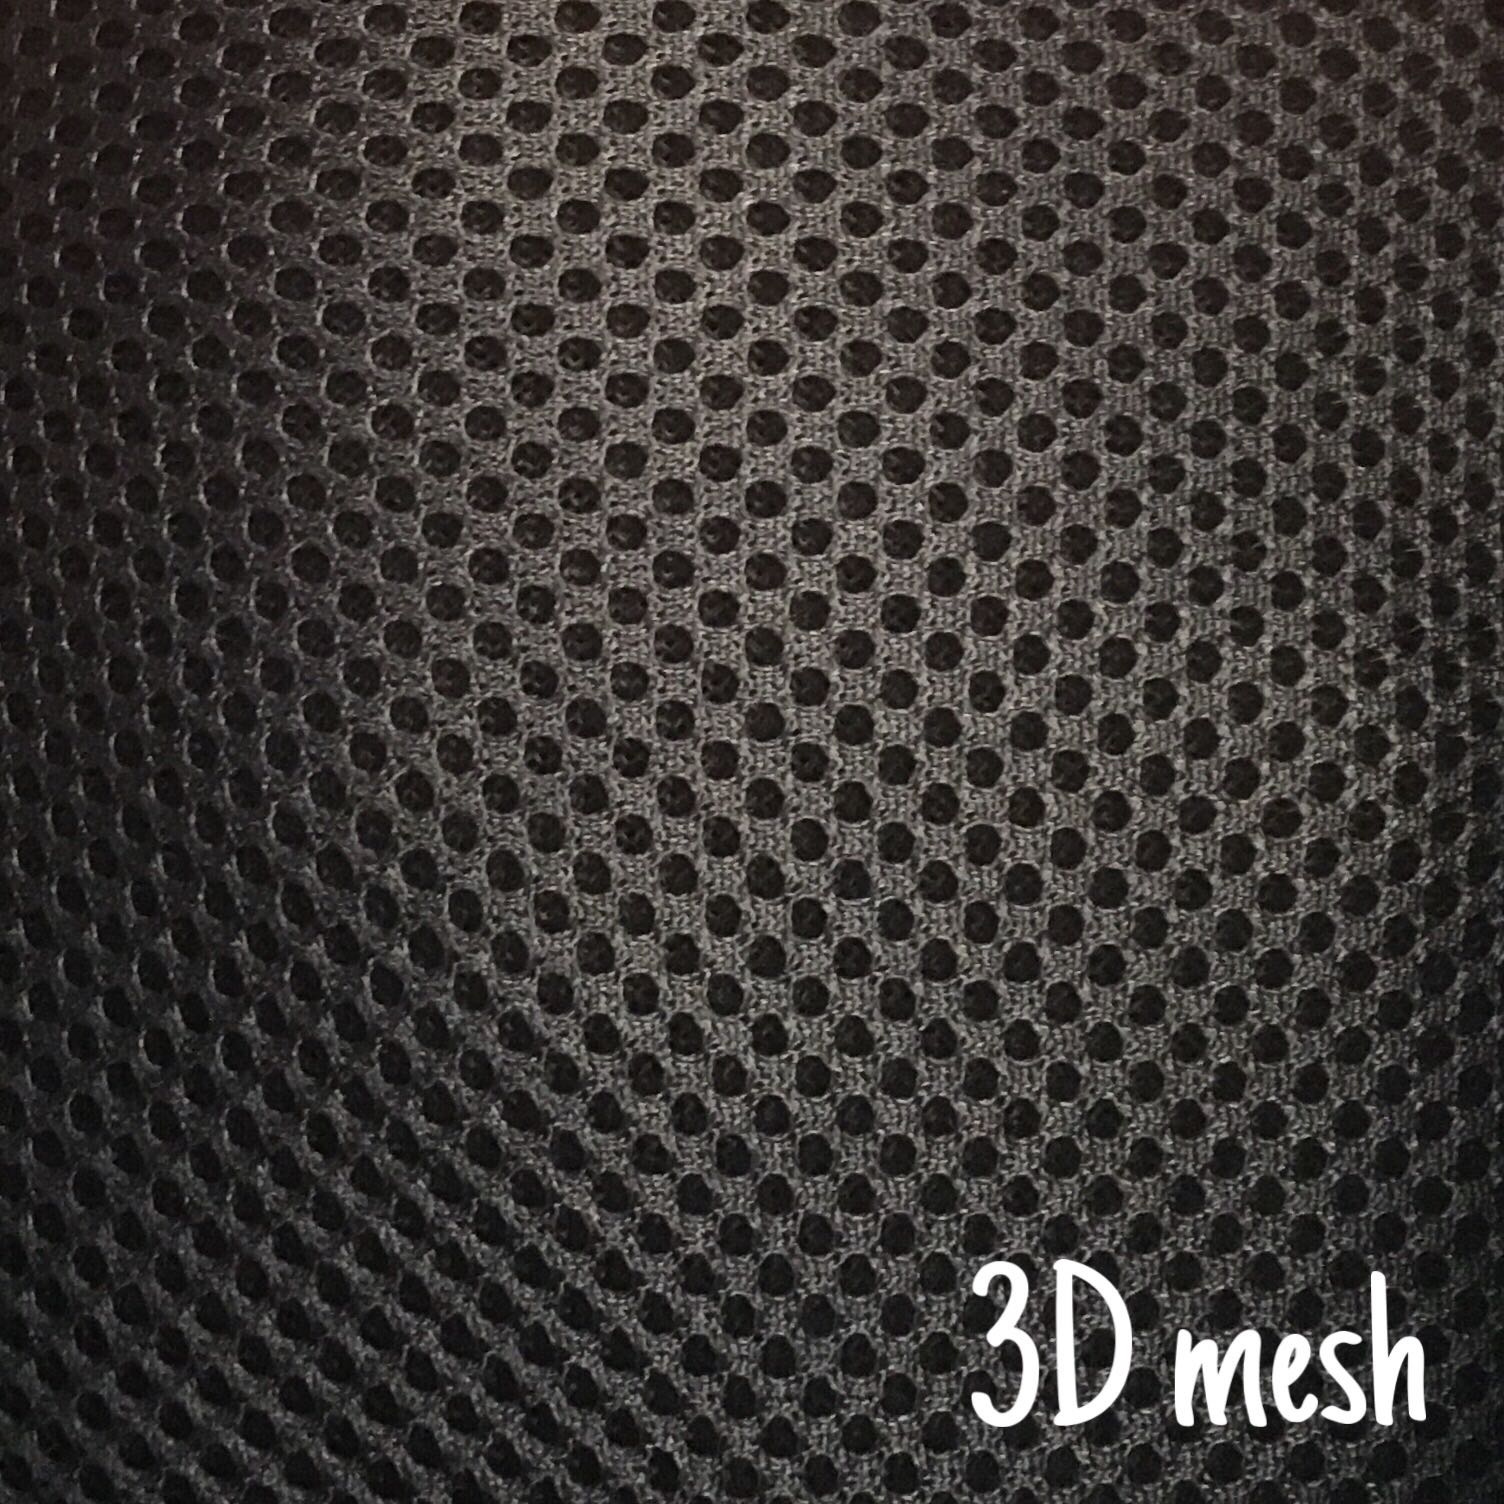 3D_mesh.jpg